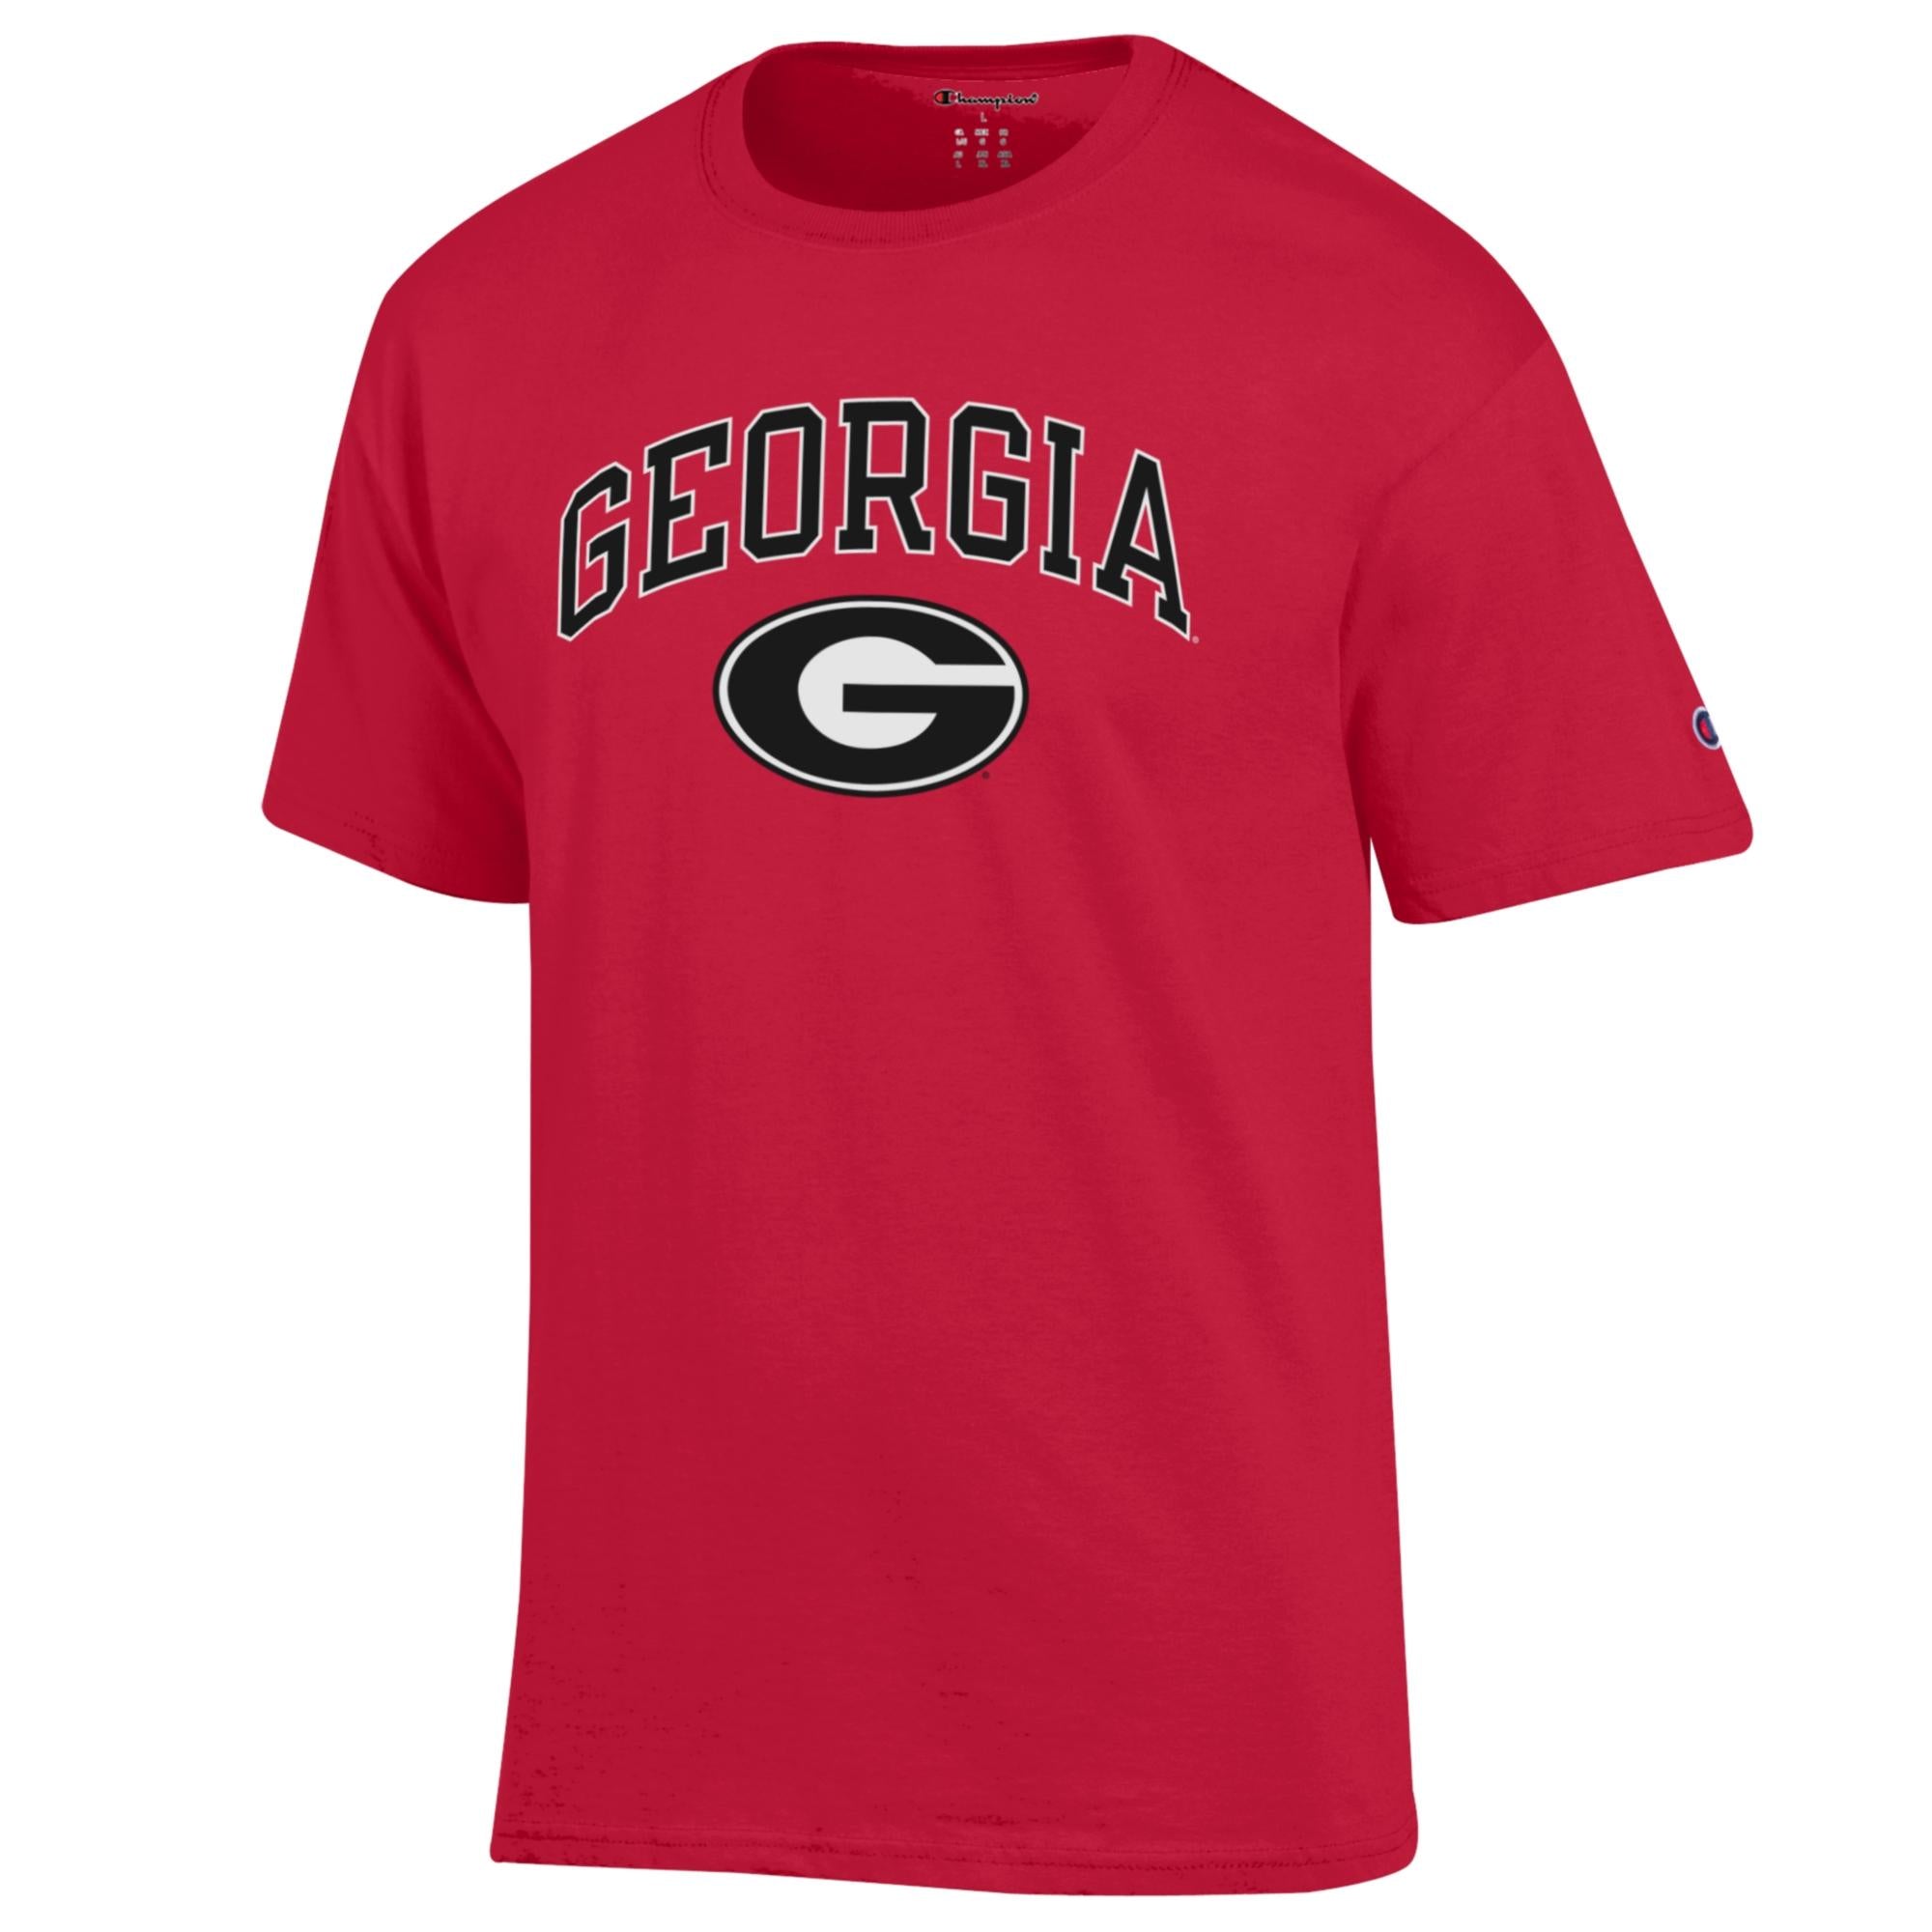 Georgia Bulldogs Logo T-shirt - Red